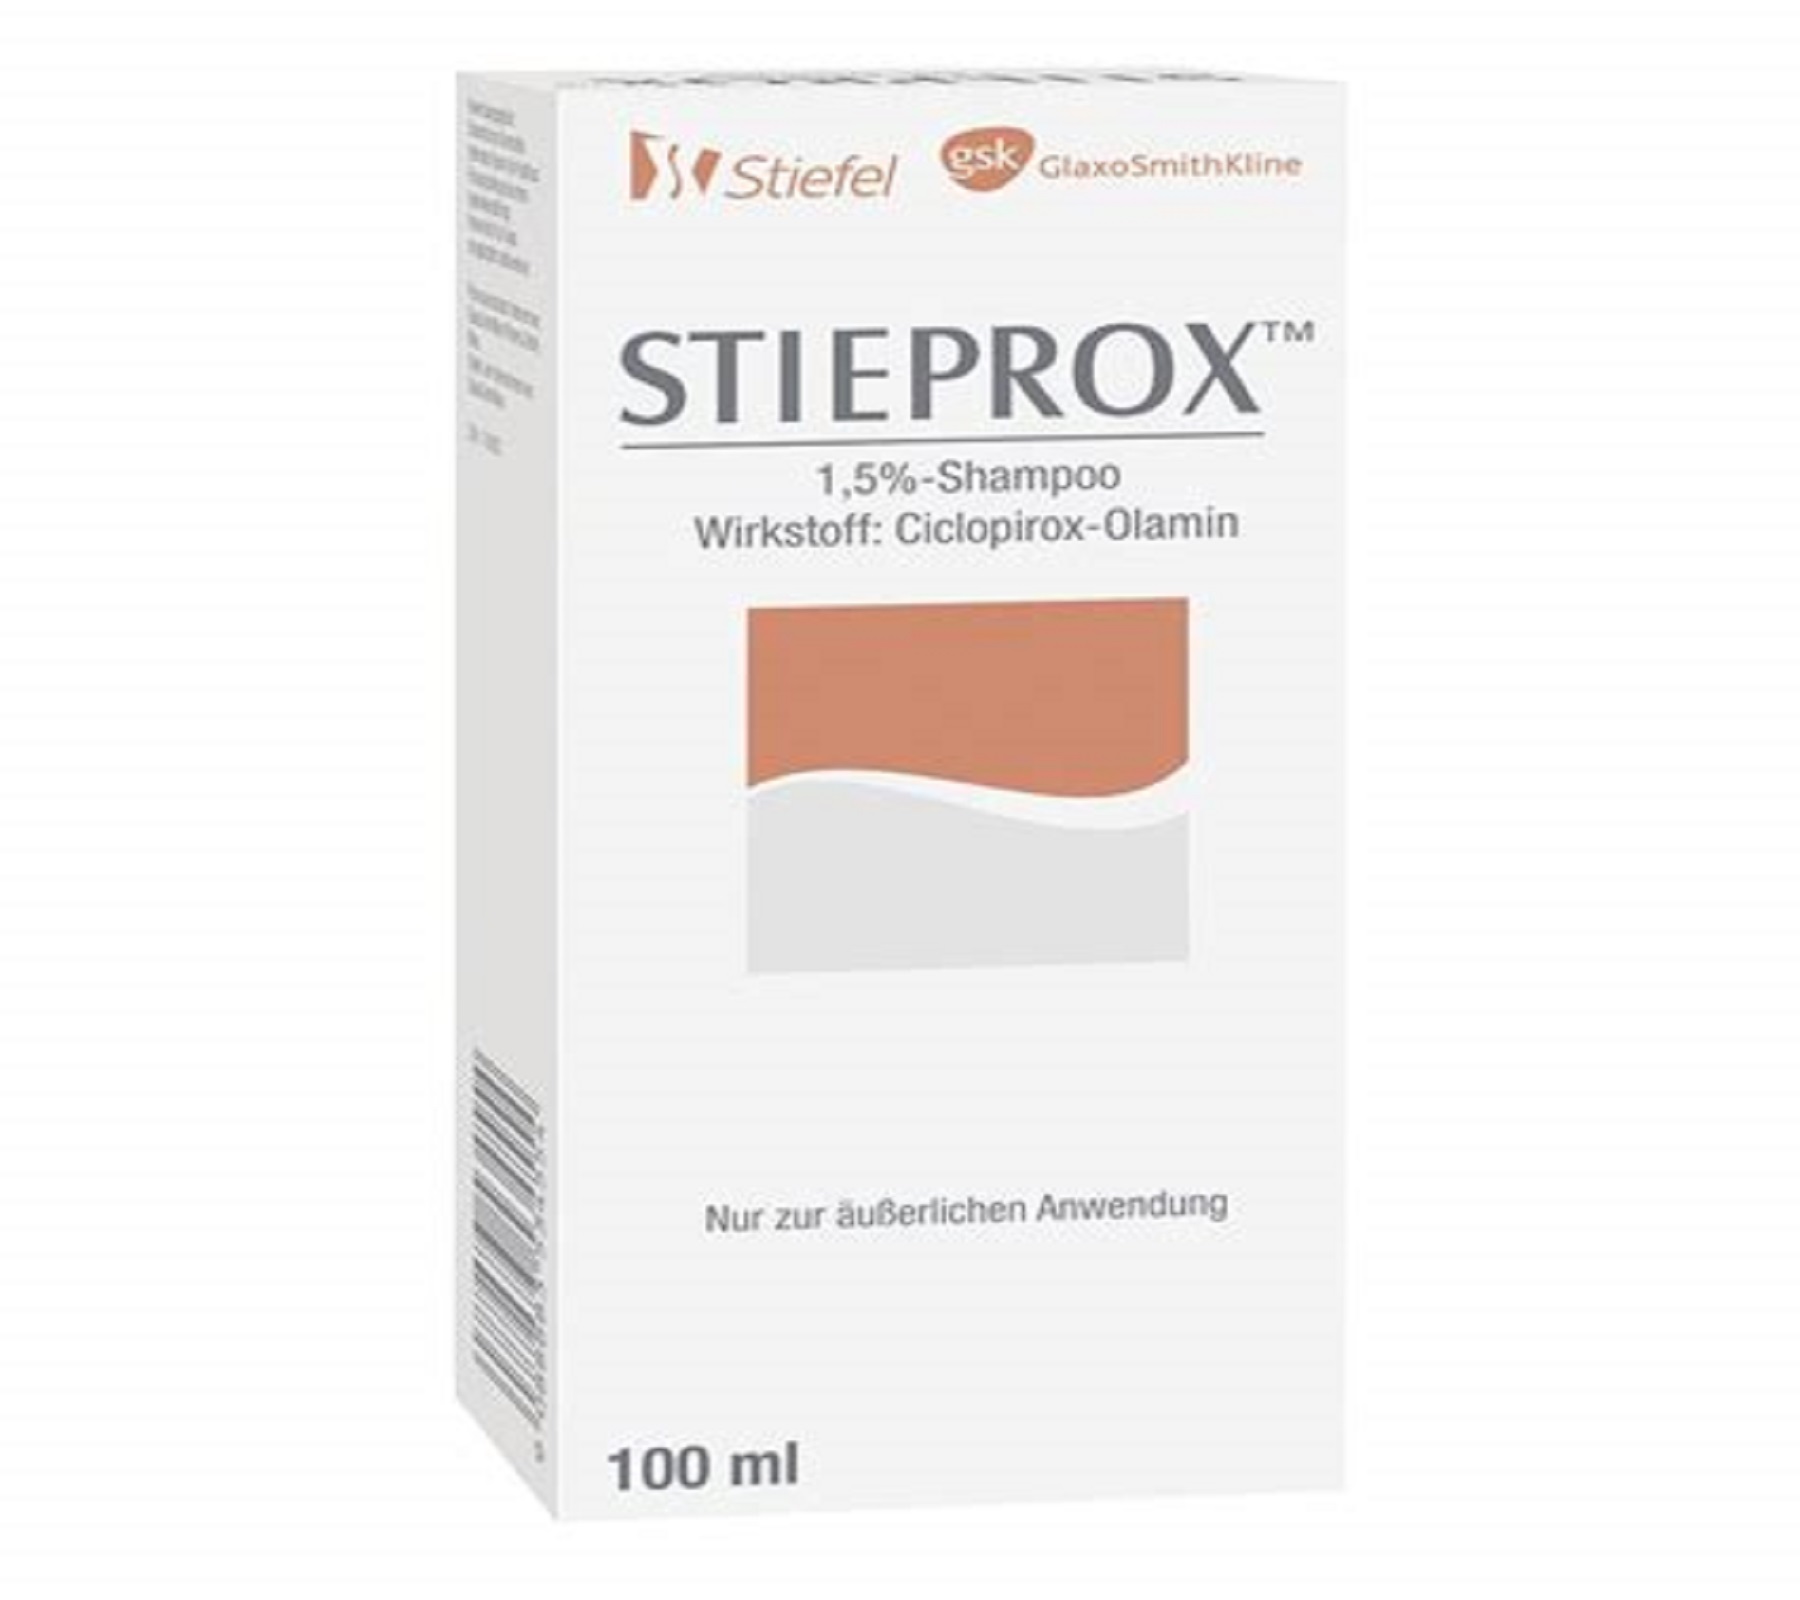 Stieprox 1,5% - Shampoo